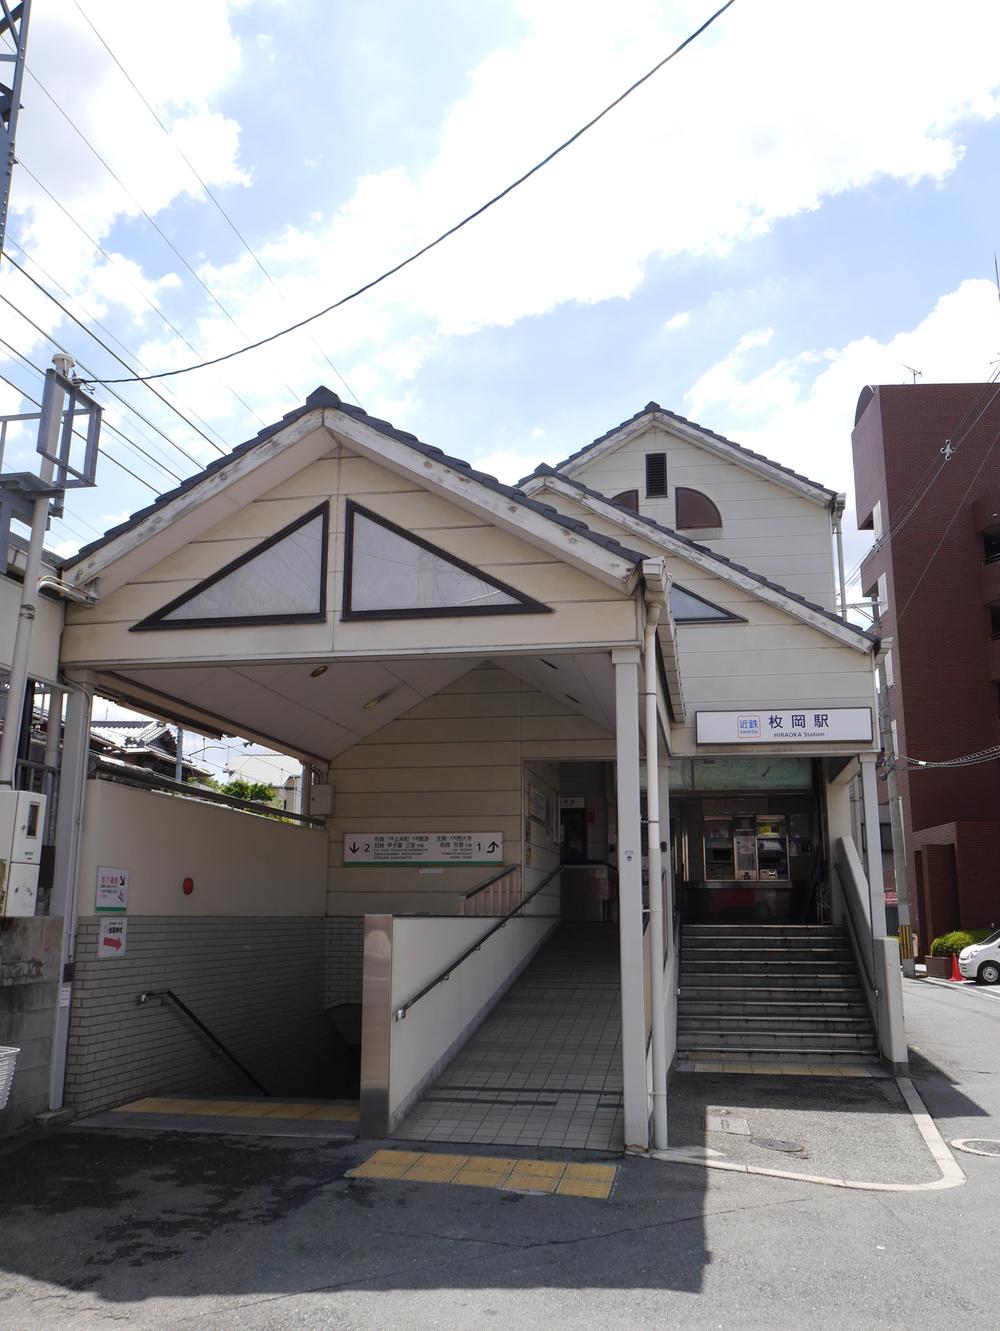 station. Kintetsu Nara Line "Single Oka" Within a 1-minute walk from the 80m station to station